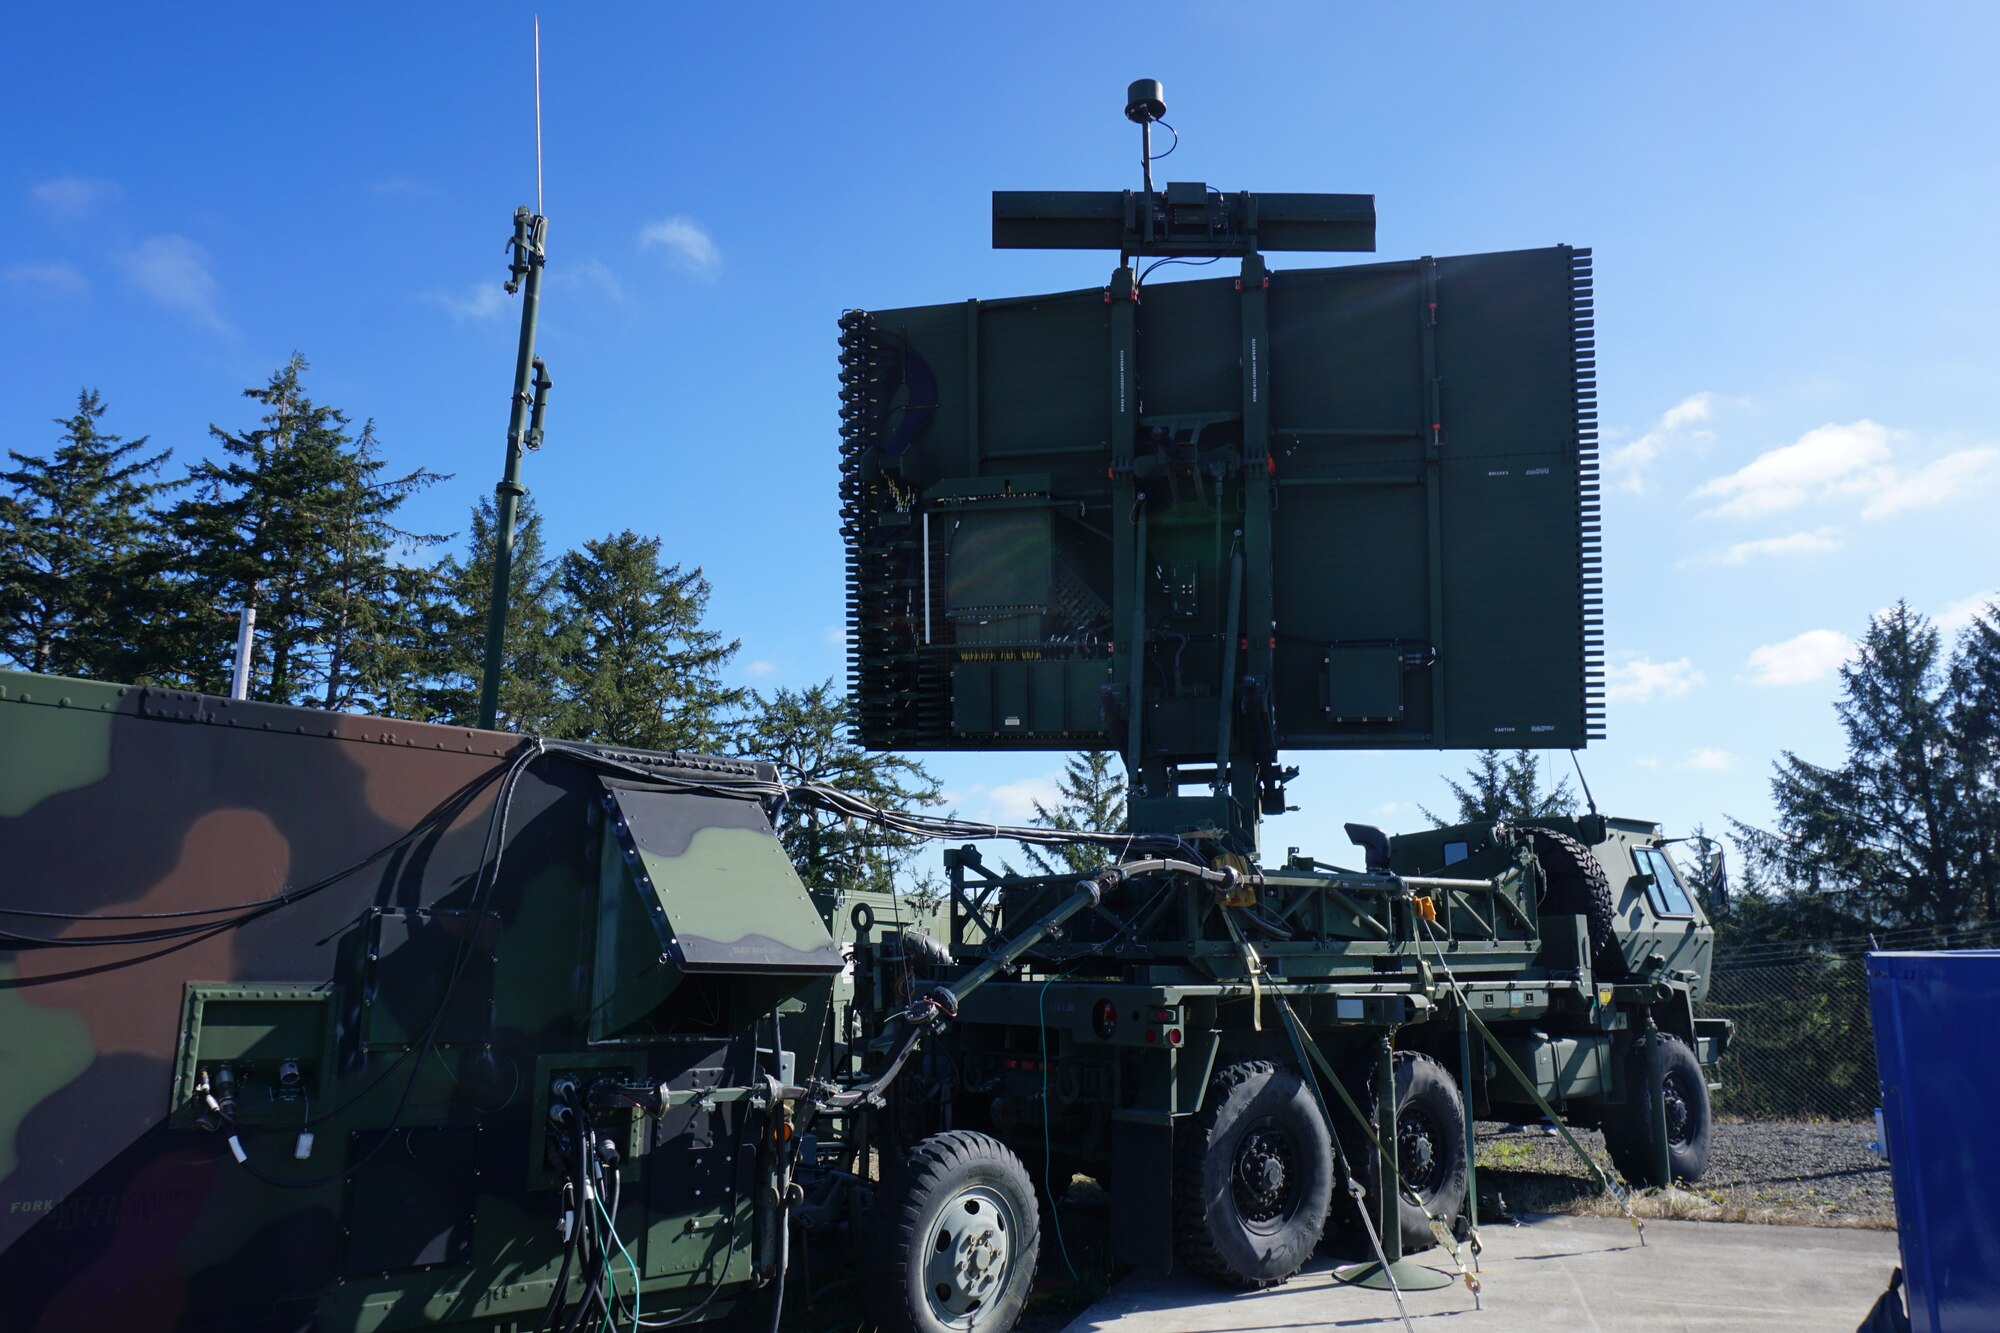 photo of TPS-75 radar on military vehicle